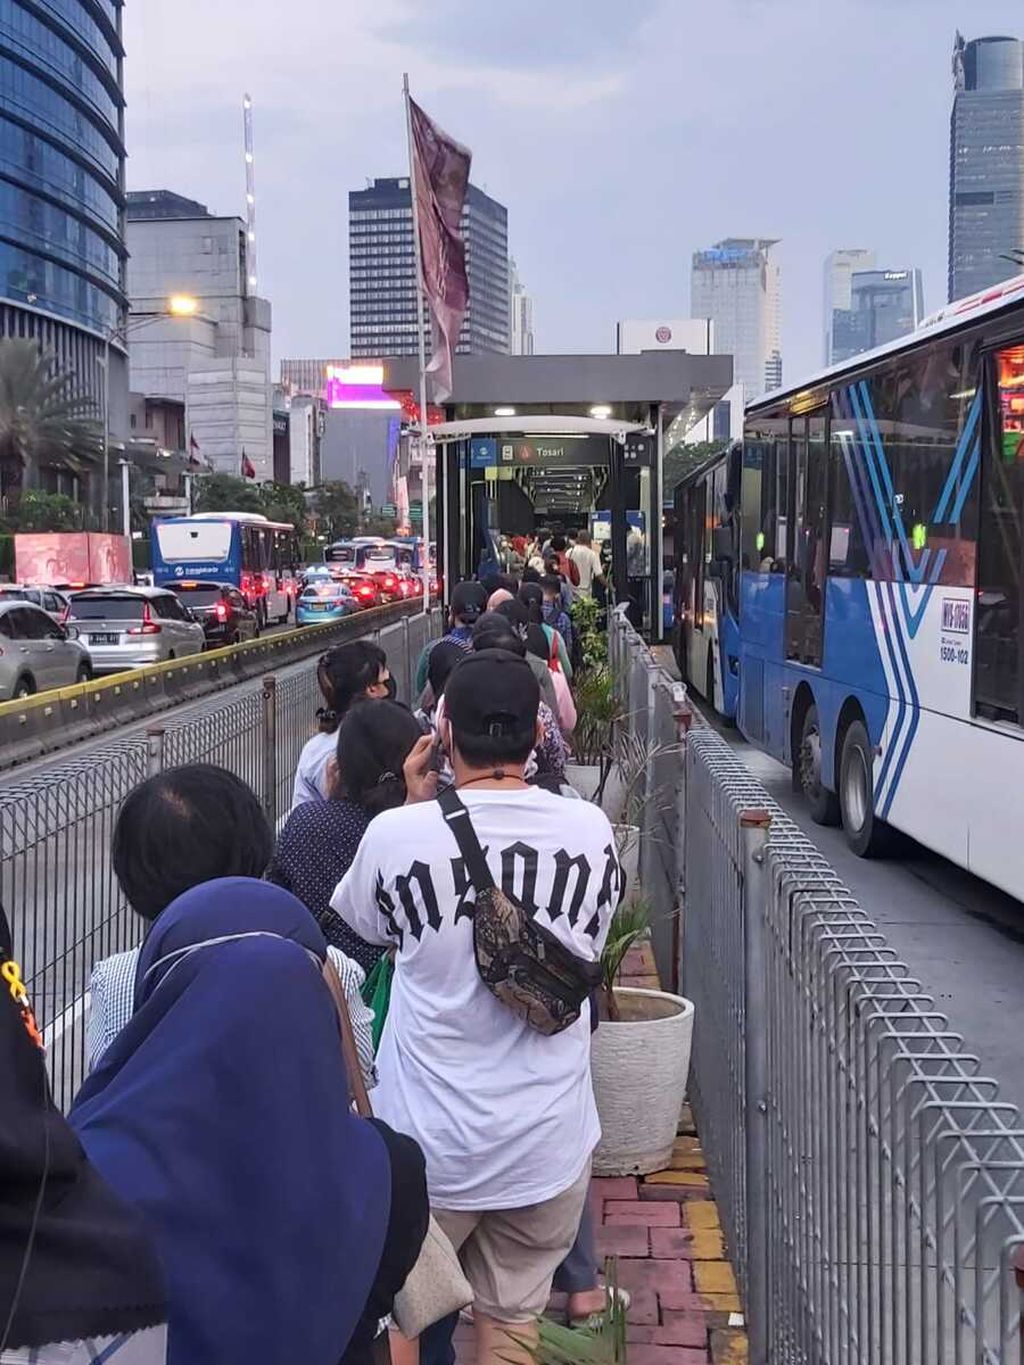  PT Jaklingko Indonesia dan PT Transportasi Jakarta menerapkan kebijakan baru bertransportasi, yaitu satu kartu satu penumpang dan penumpang wajib menempelkan di perangkat pembaca saat masuk-keluar halte (<i>tap in</i> <i>an tap out)</i>. Kebijakan yang minim sosialisasi itu menyulitkan penumpang dan memunculkan antrean seperti di Halte Tosari, Jakarta Pusat, Rabu (5/10/2022) petang.